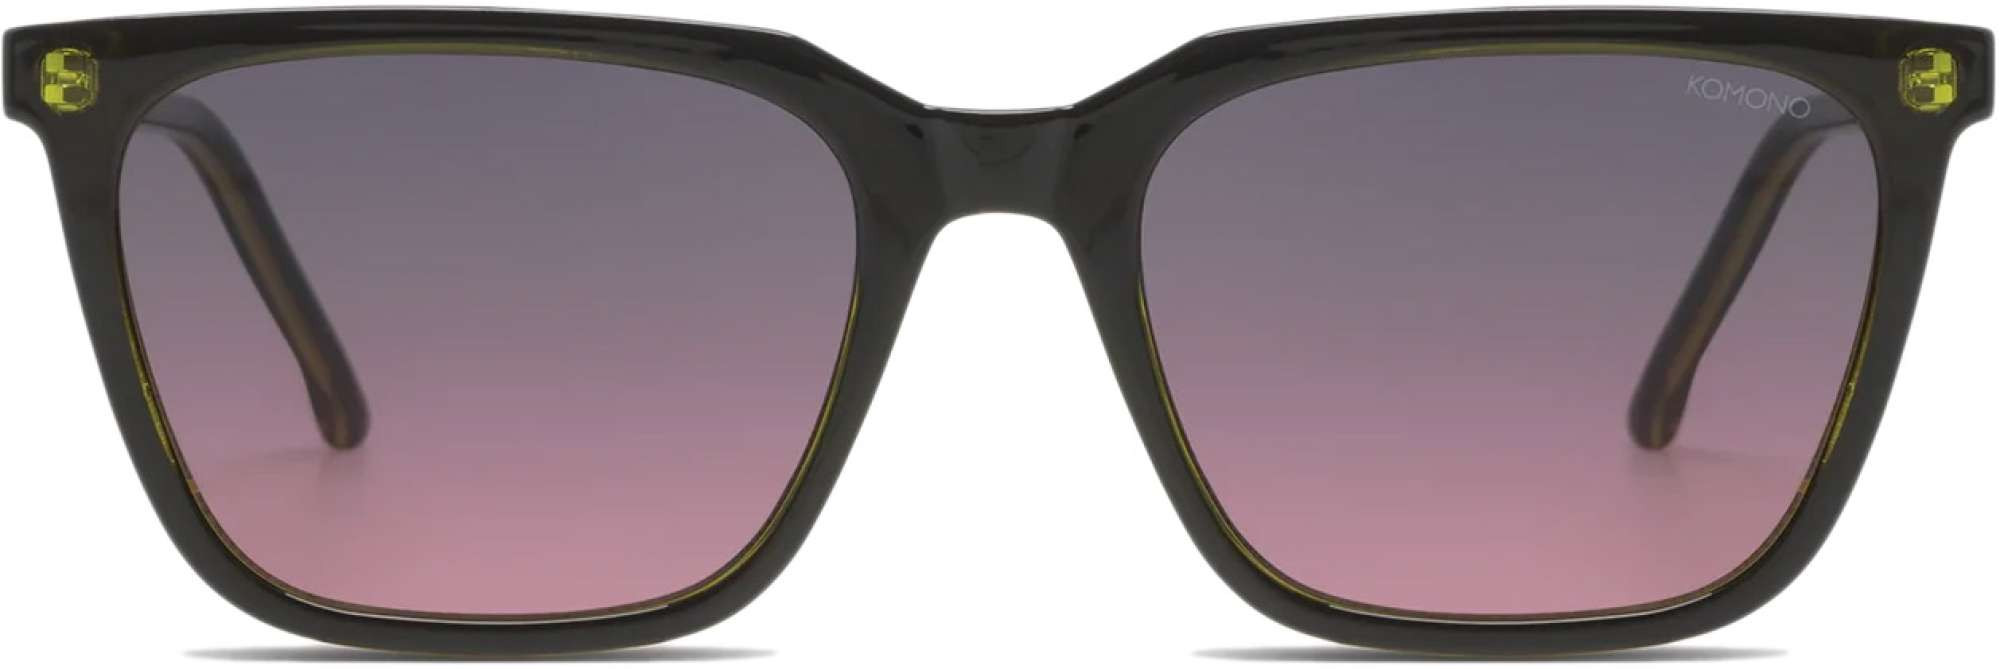 Komono Jay sunglasses matrix